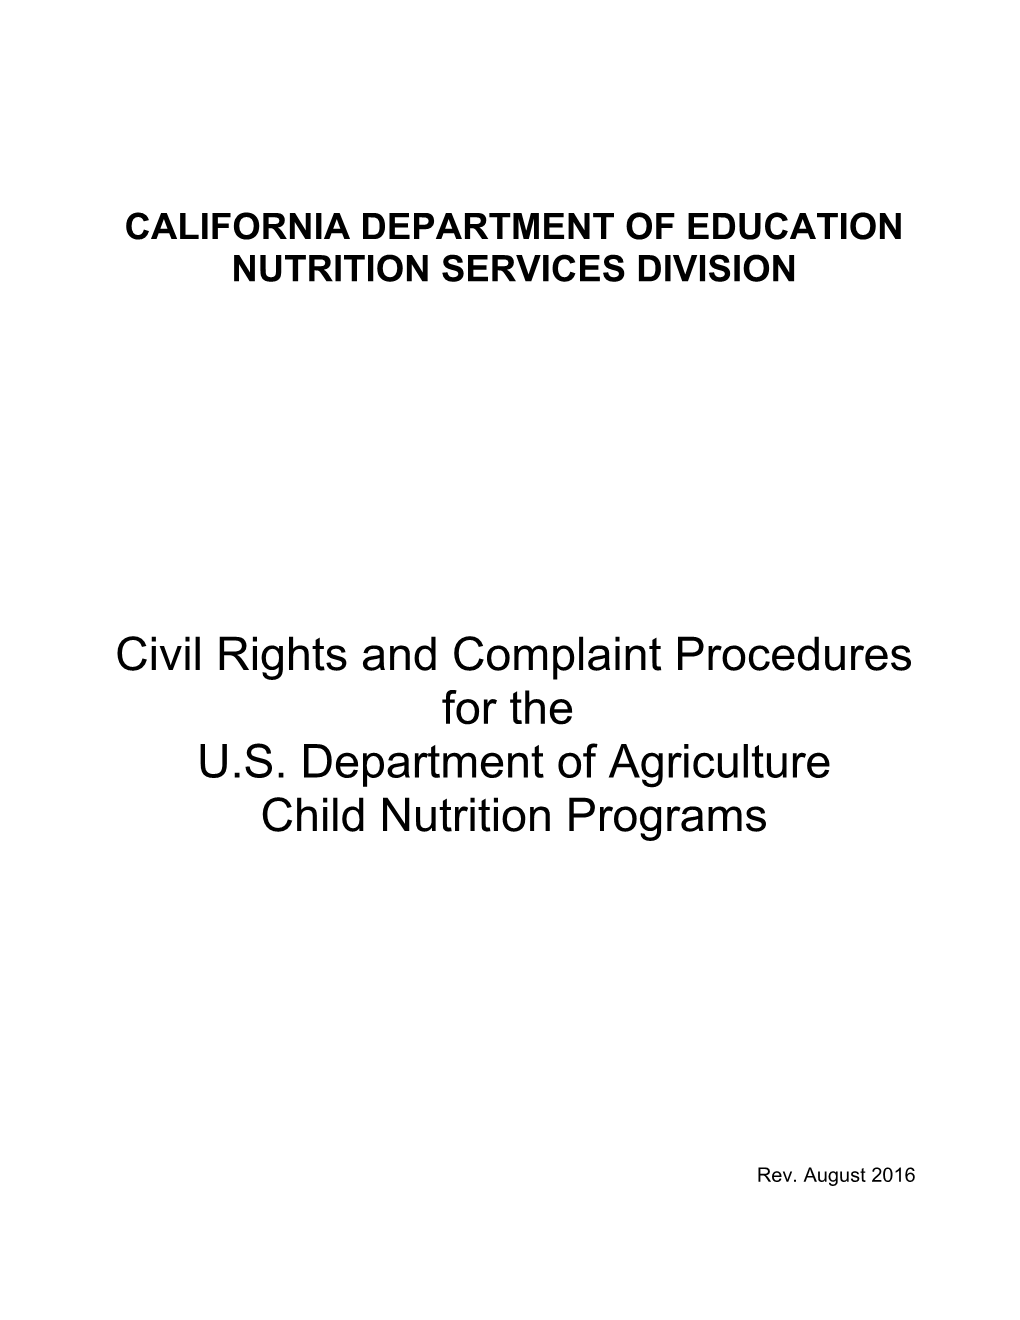 Civil Rights And Complaints Handbook - USDA Civil Rights (CA Dept Of Education)